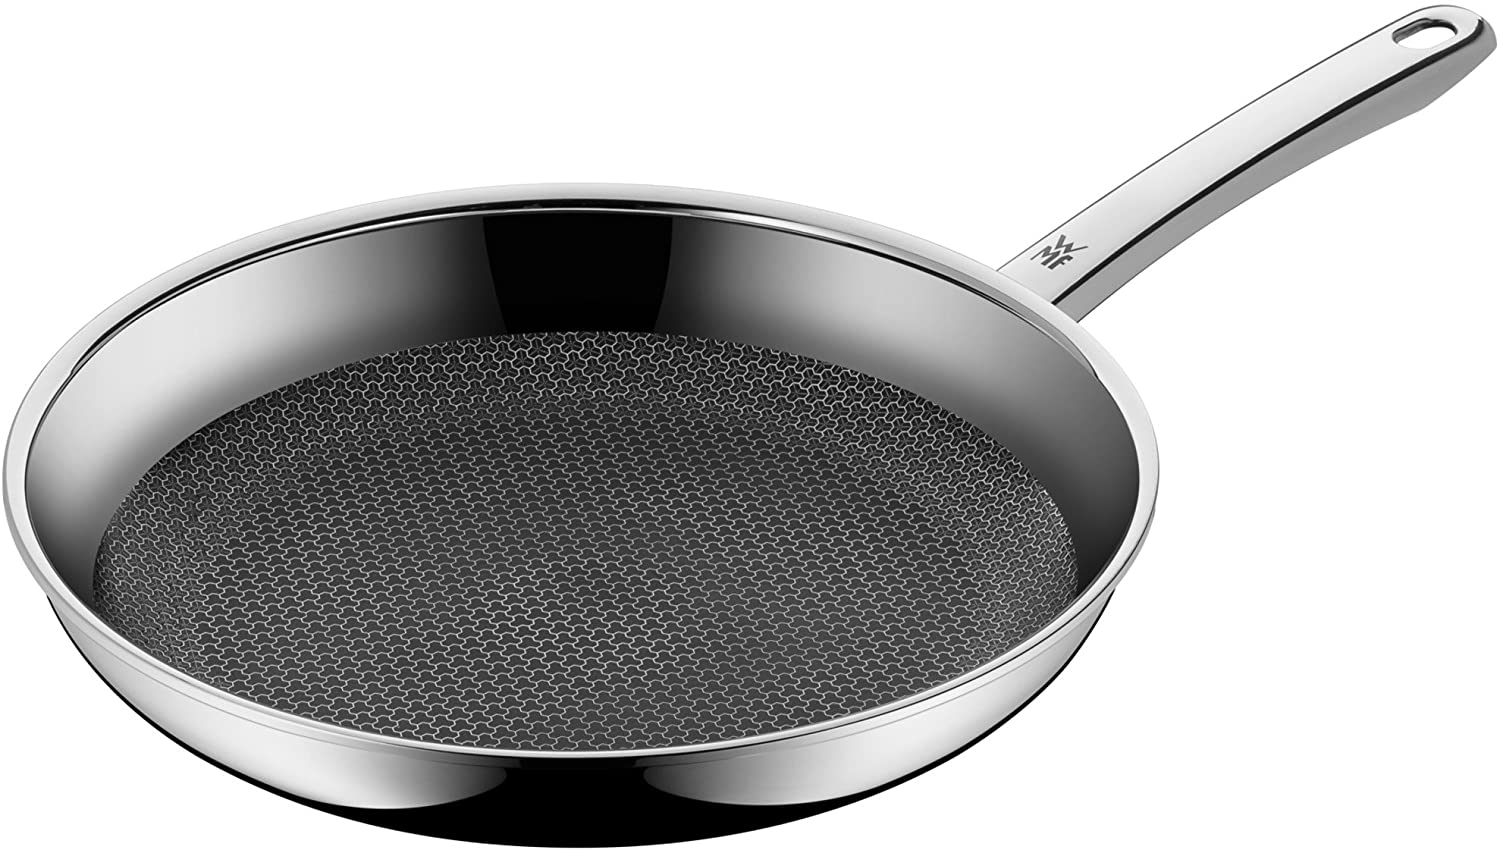 WMF Profi Resist frying pan., 28 cm